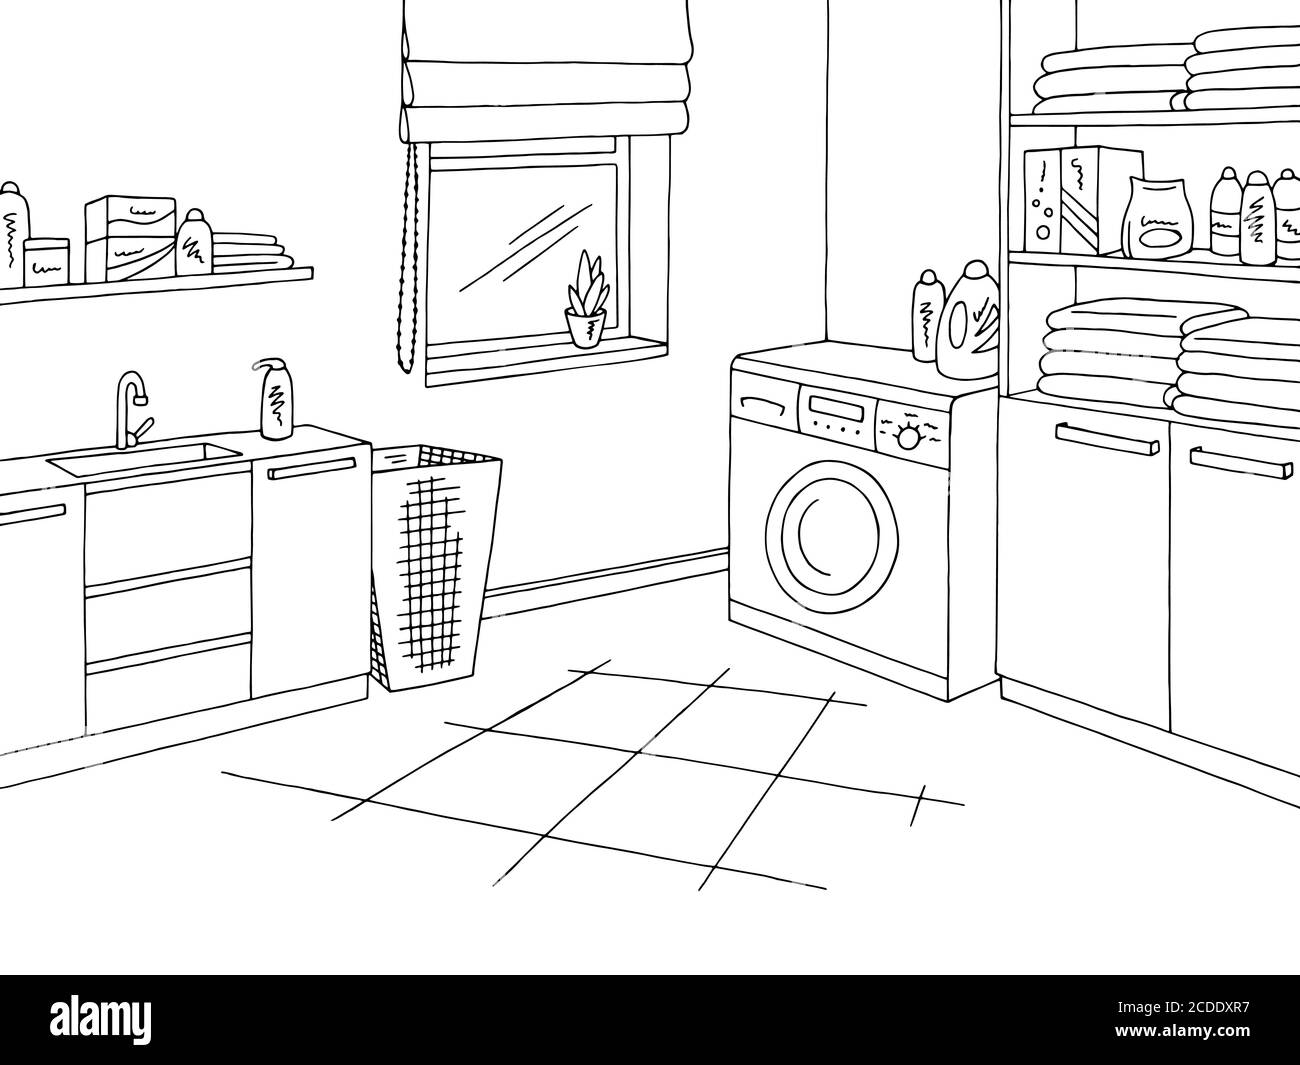 Laundry room home interior graphic black white sketch illustration